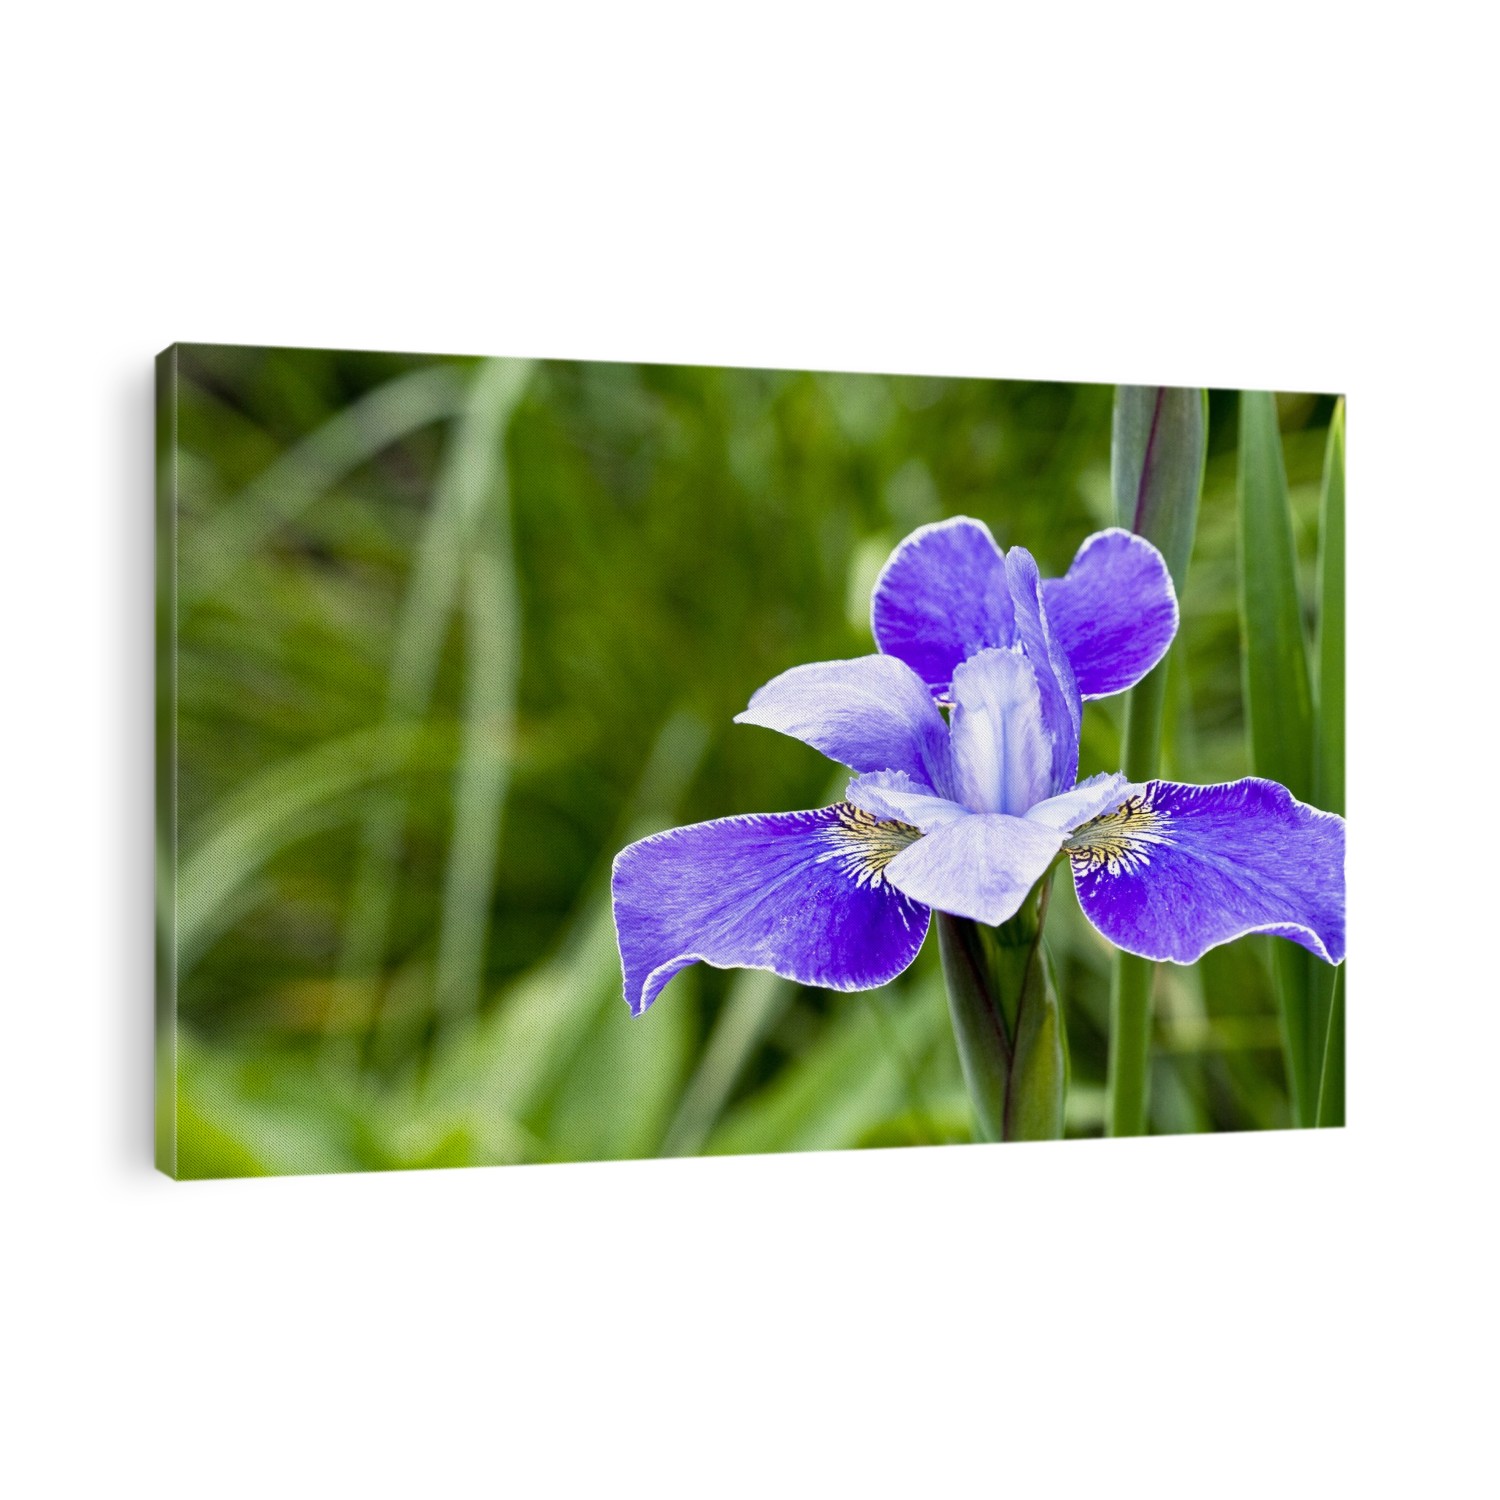 Flower of a Flag Iris (Iris sibirica 'Silver' ).